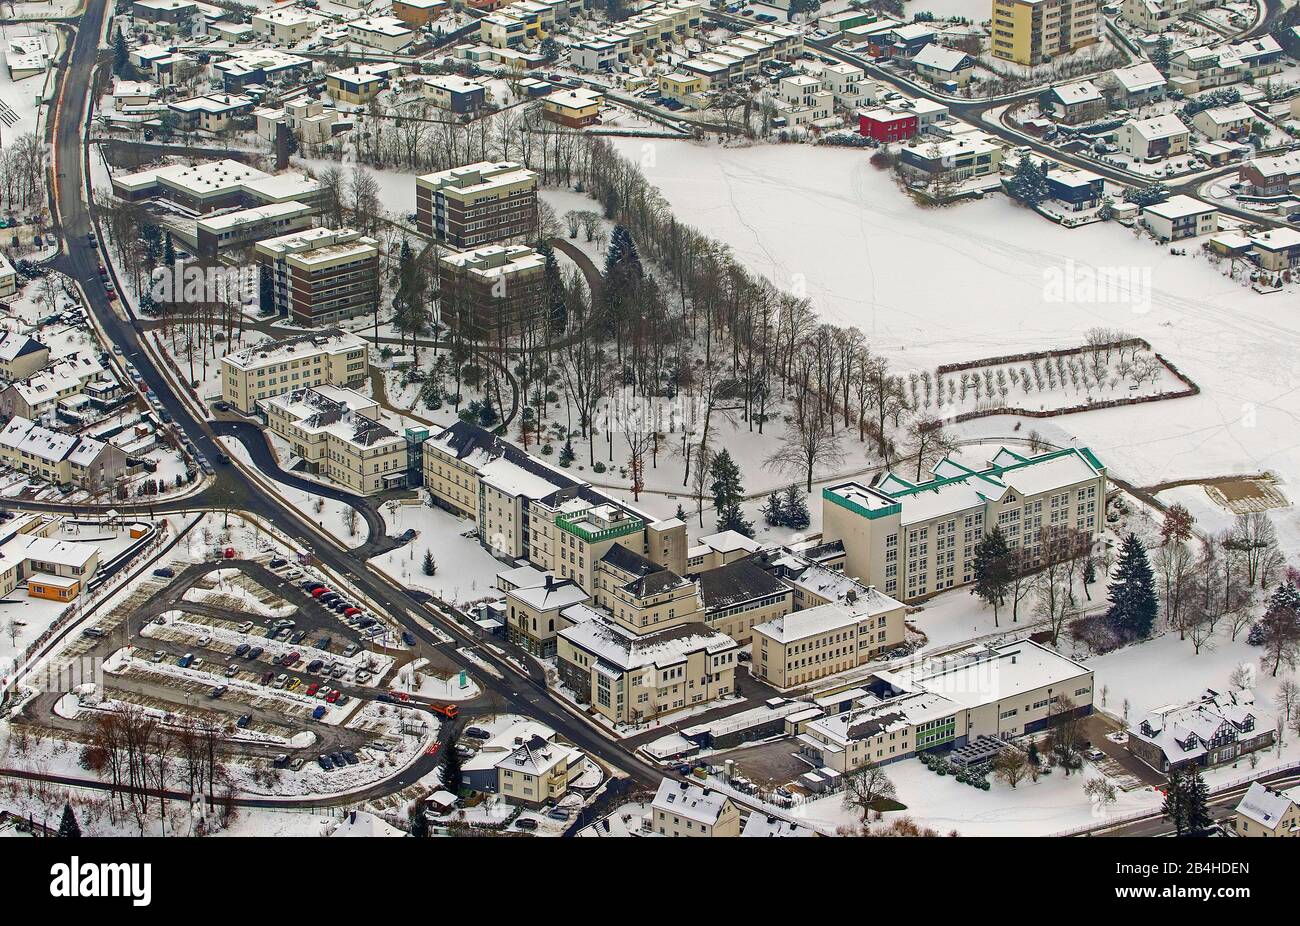 , St. Walburga hospital, St. Walburga-Krankenhaus, in Meschede in Winter, 26.01.2013, aerial view, Germany, North Rhine-Westphalia, Sauerland, Meschede Stock Photo